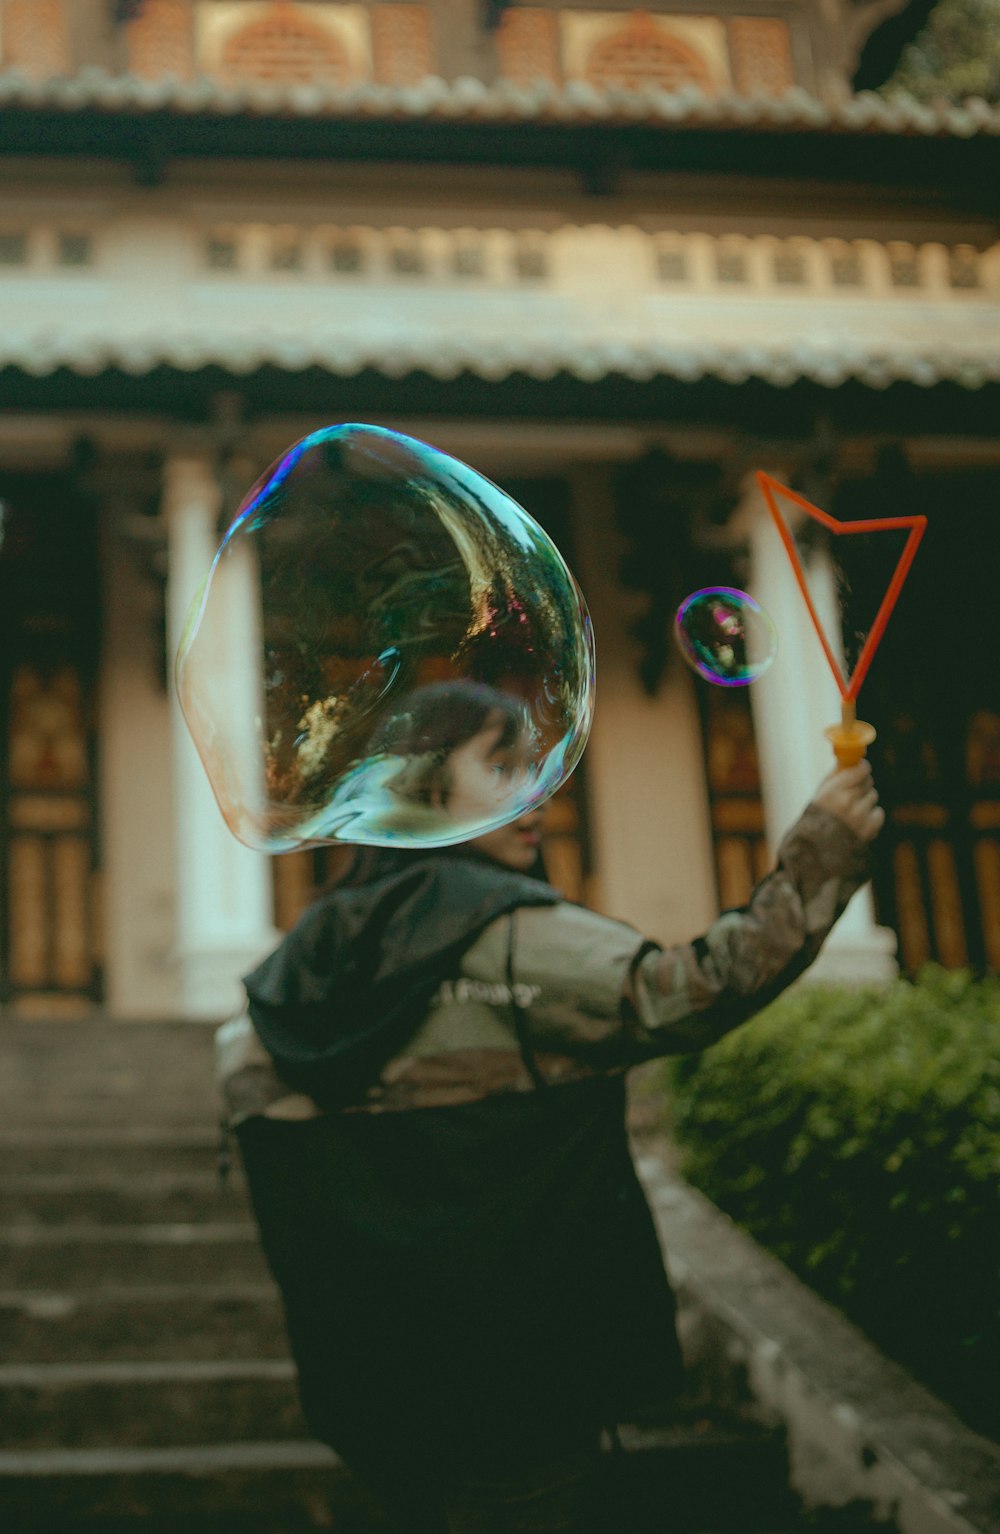 woman holding orange plastic bubble maker during daytime